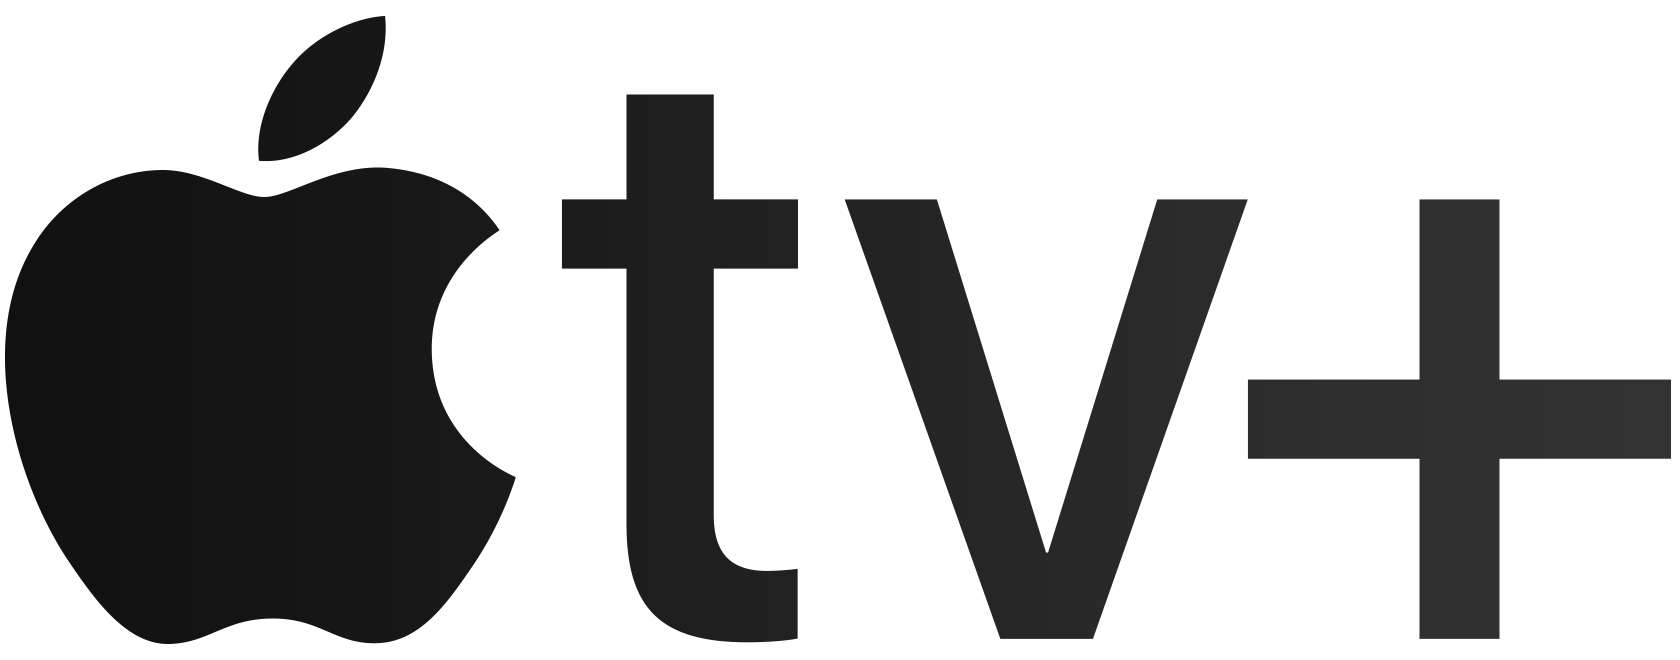 Apple_TV+_logo.png